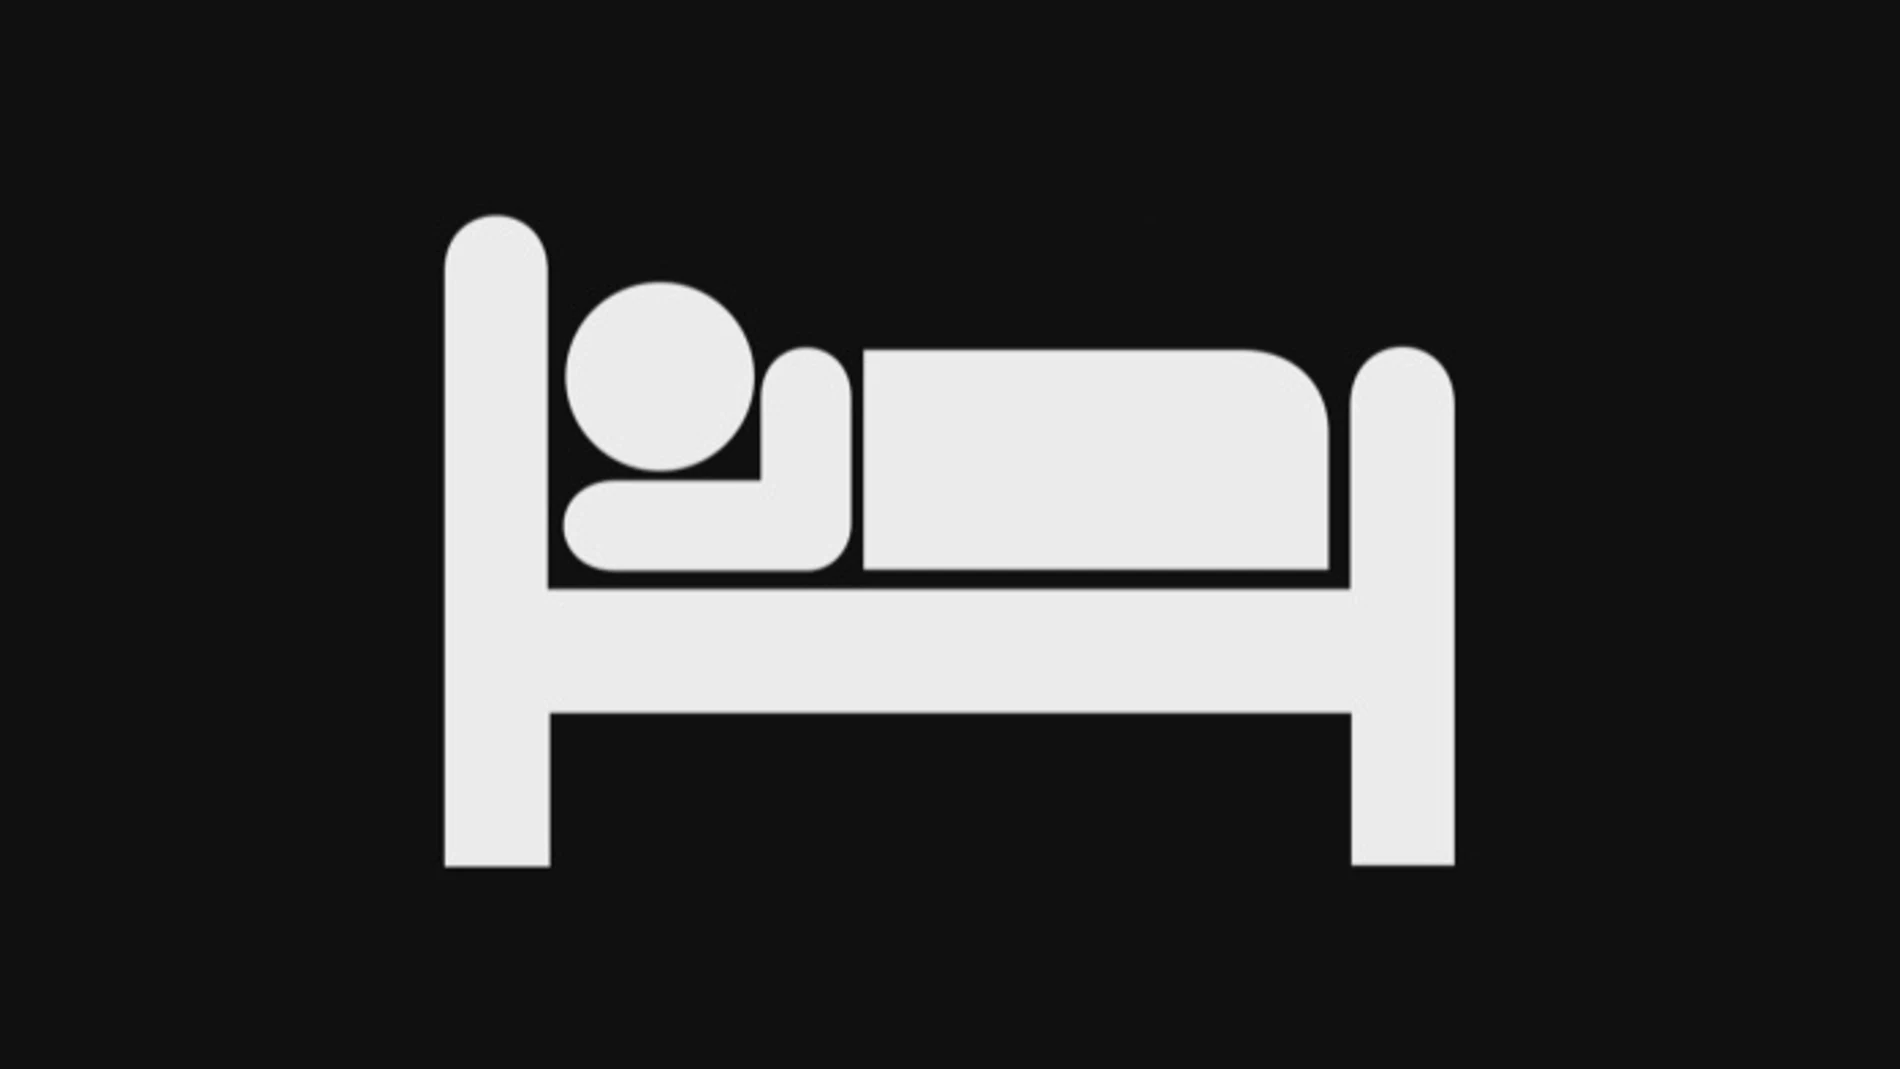 Icono de una persona durmiendo